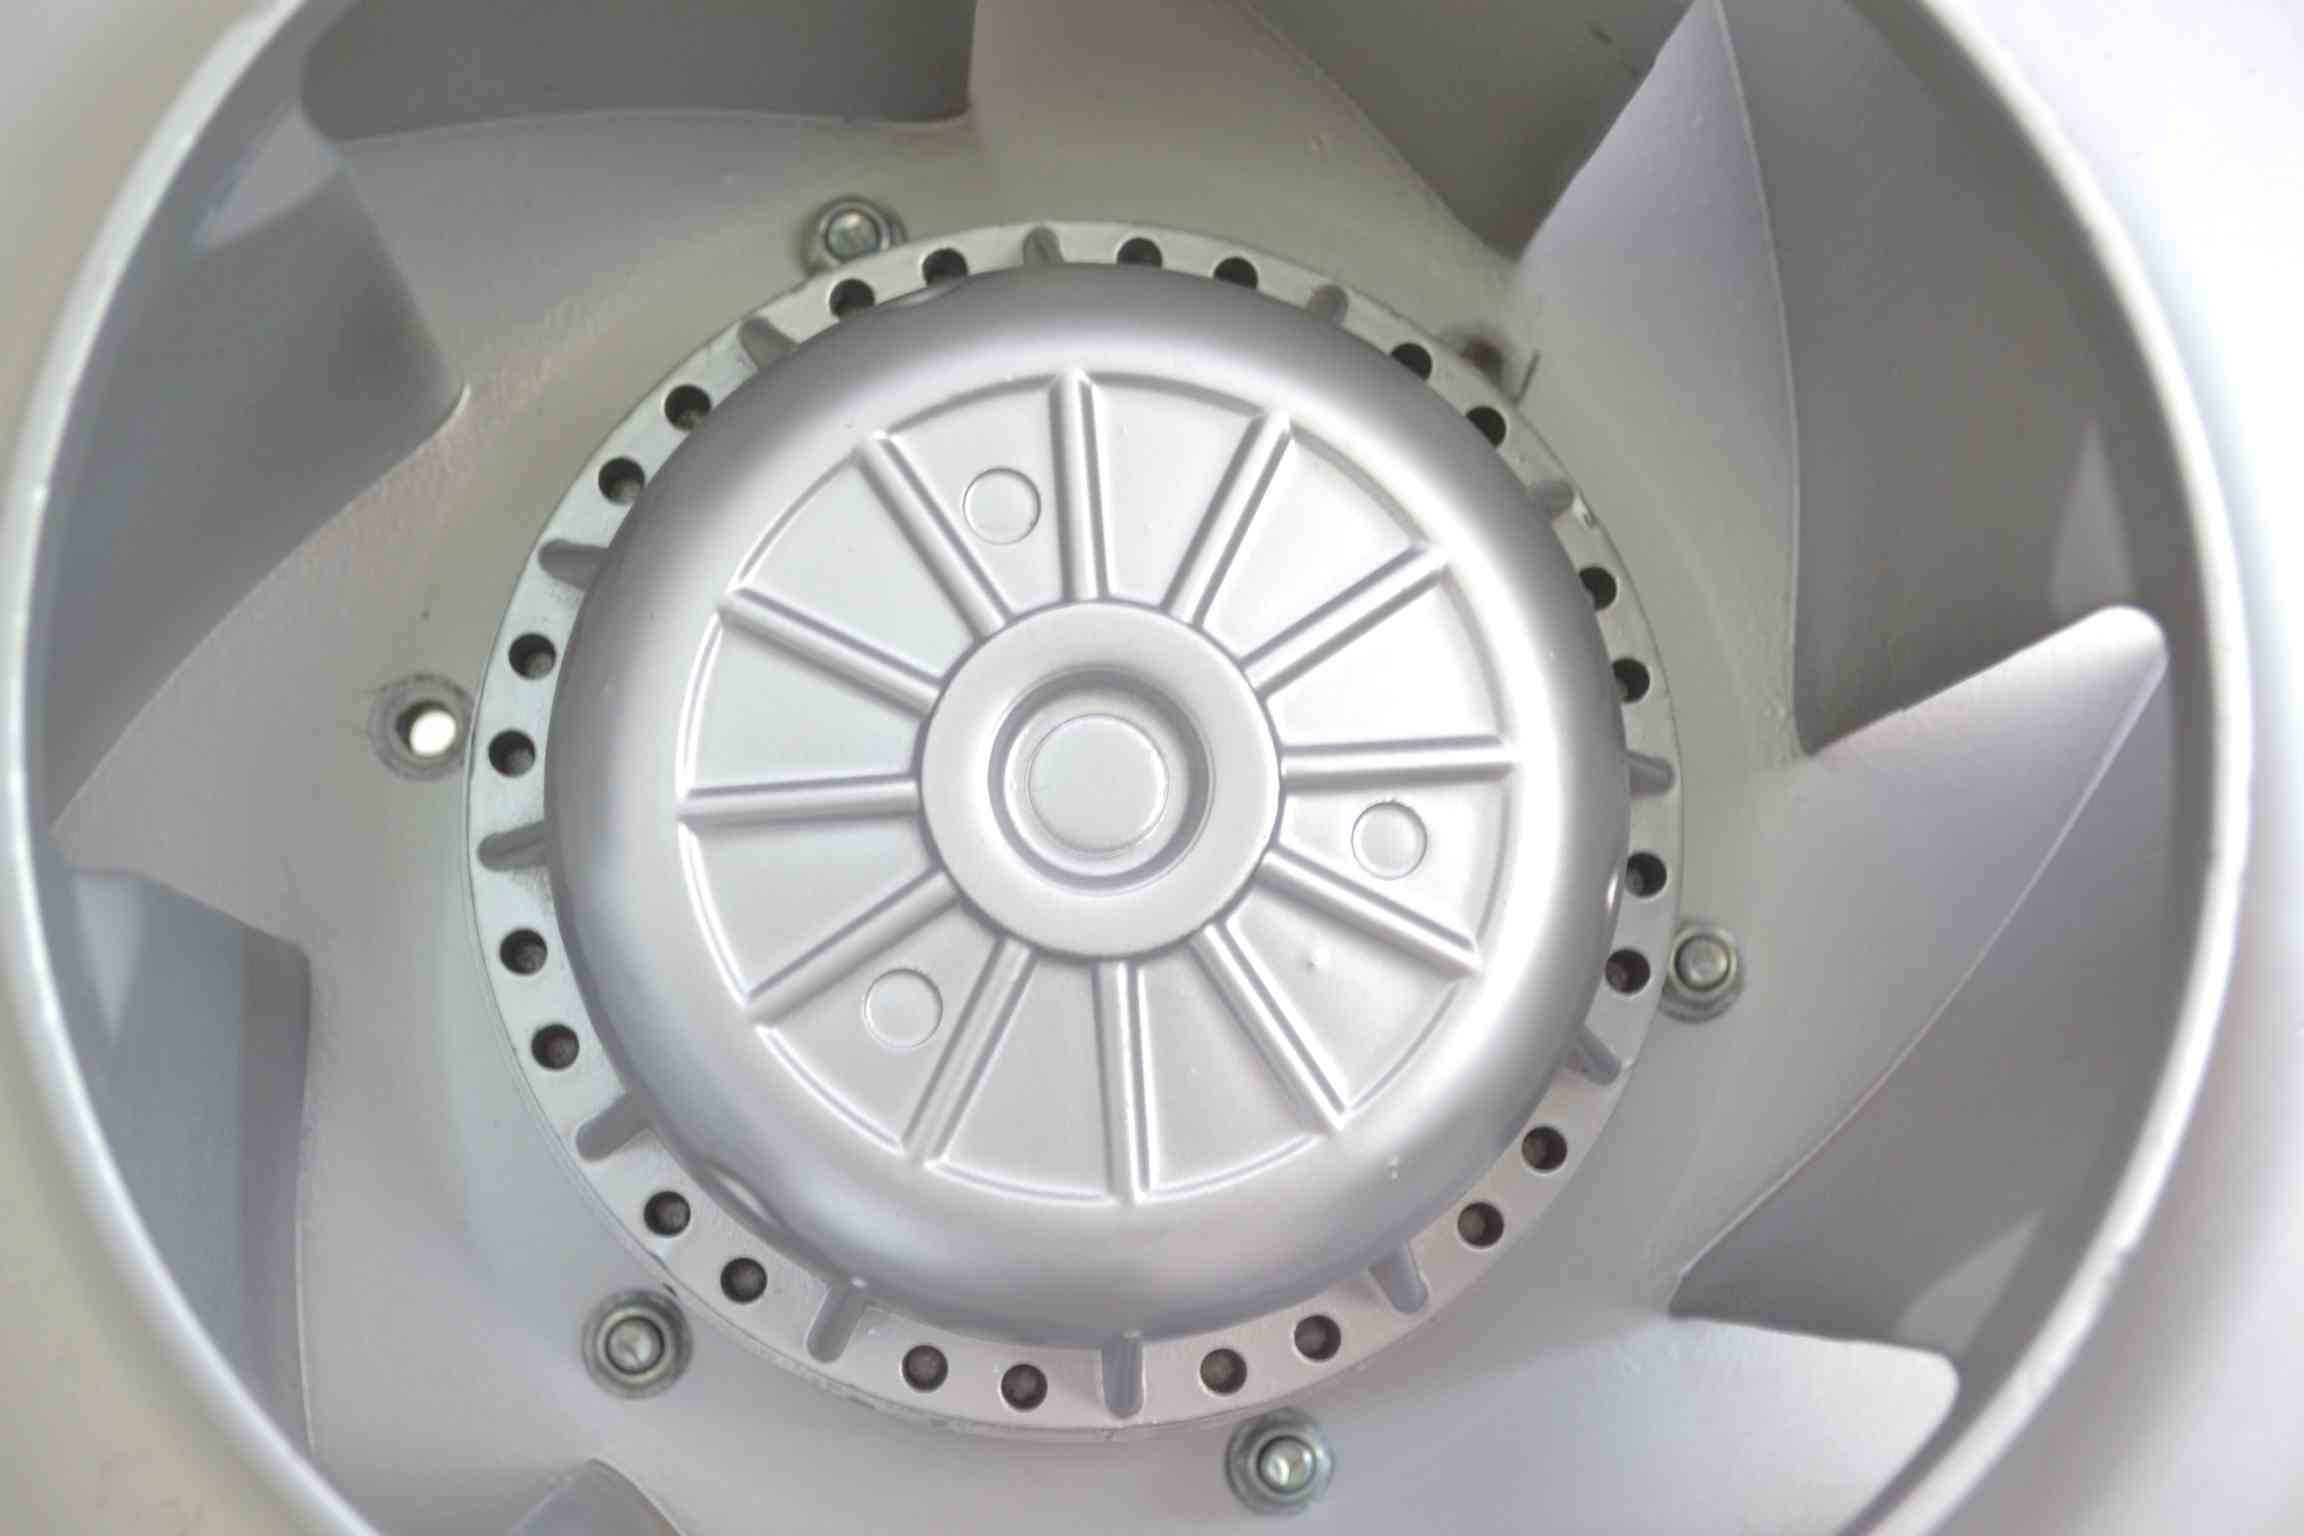  Ip54 Aluminum Sheet Metal Impeller 400mm Centrifugal Cooling Fan 1358rpm Manufactures